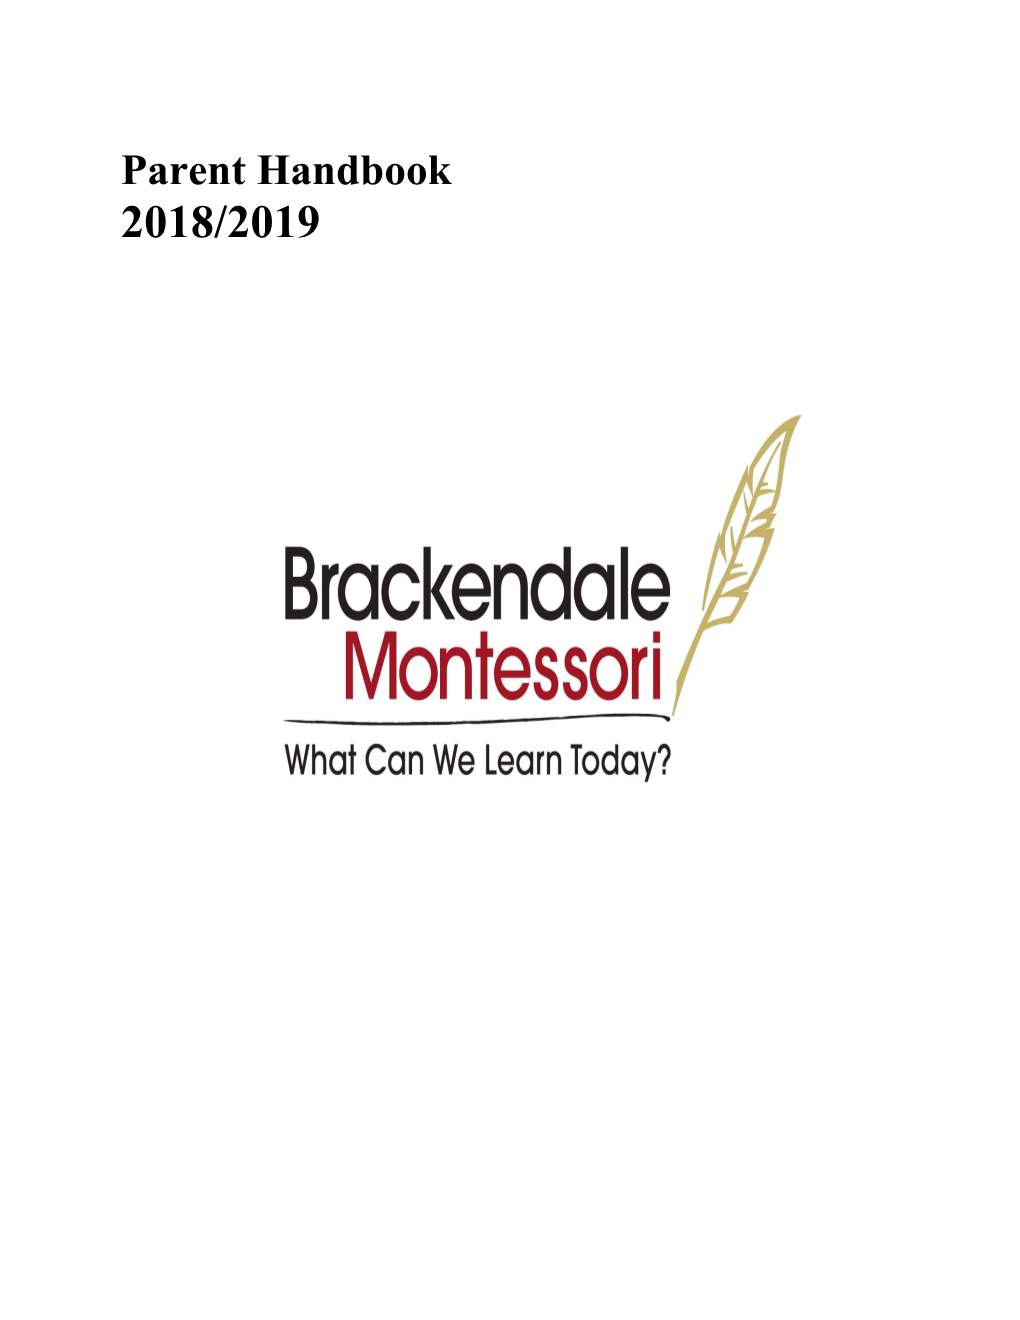 Parent Handbook s3